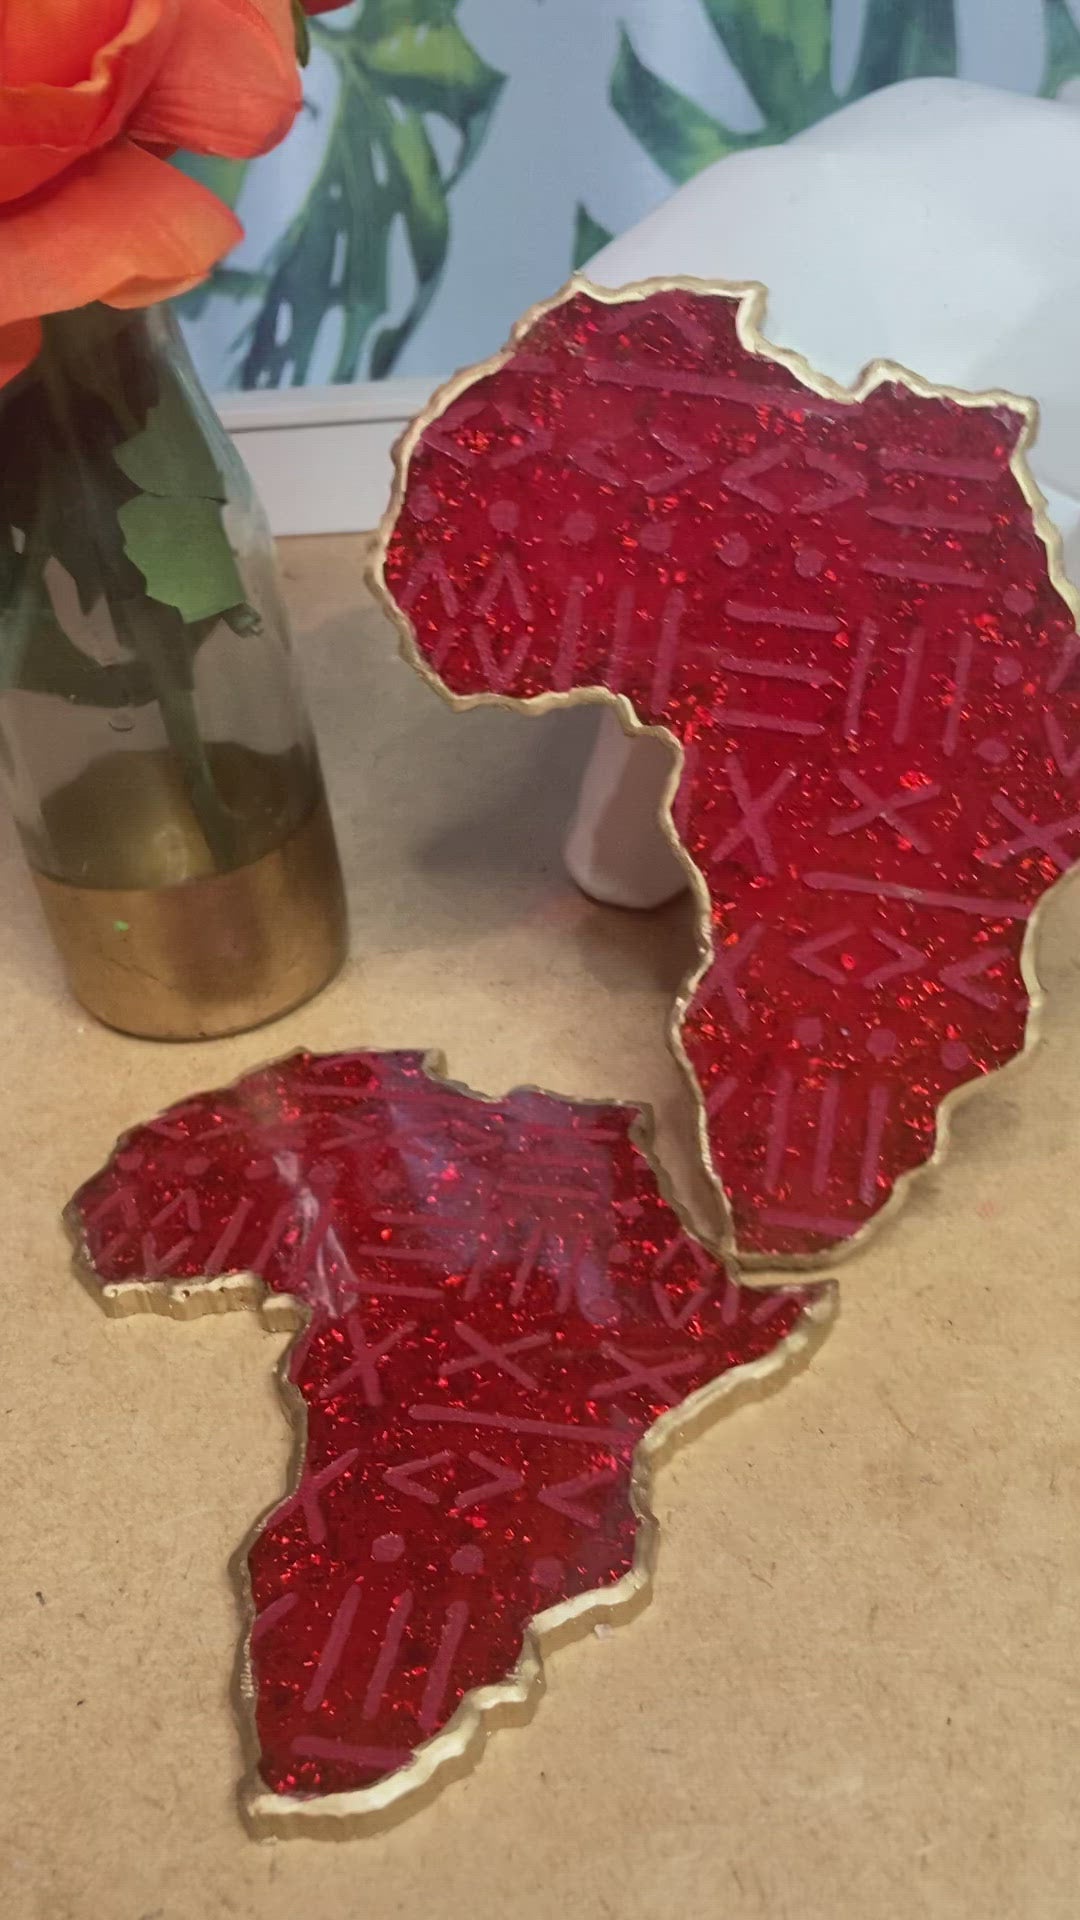 Africa "Mudcloth" Coaster Set